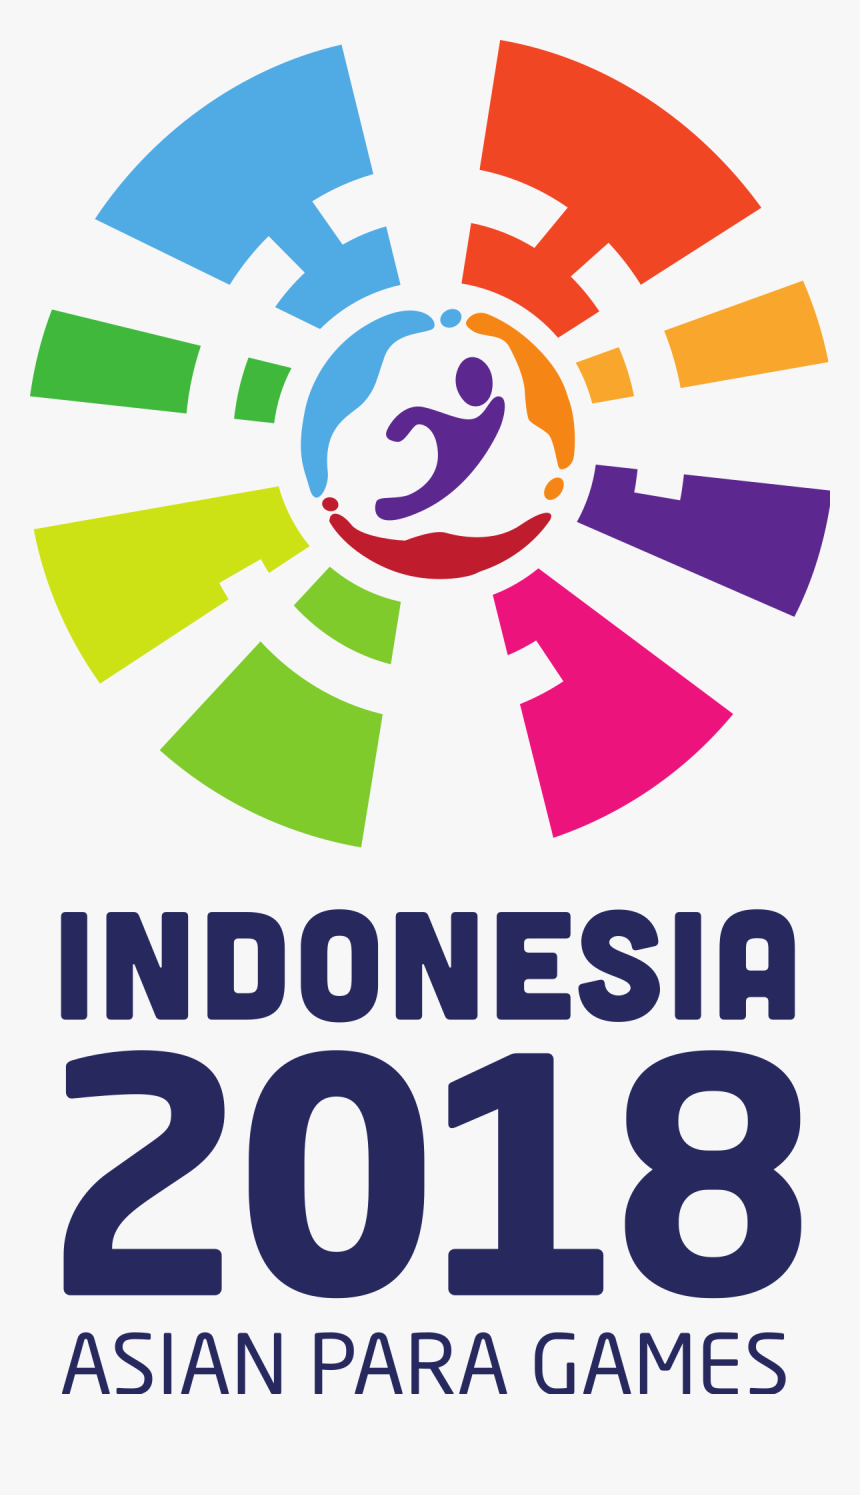 Asian Para Games 2018 Png - KibrisPDR